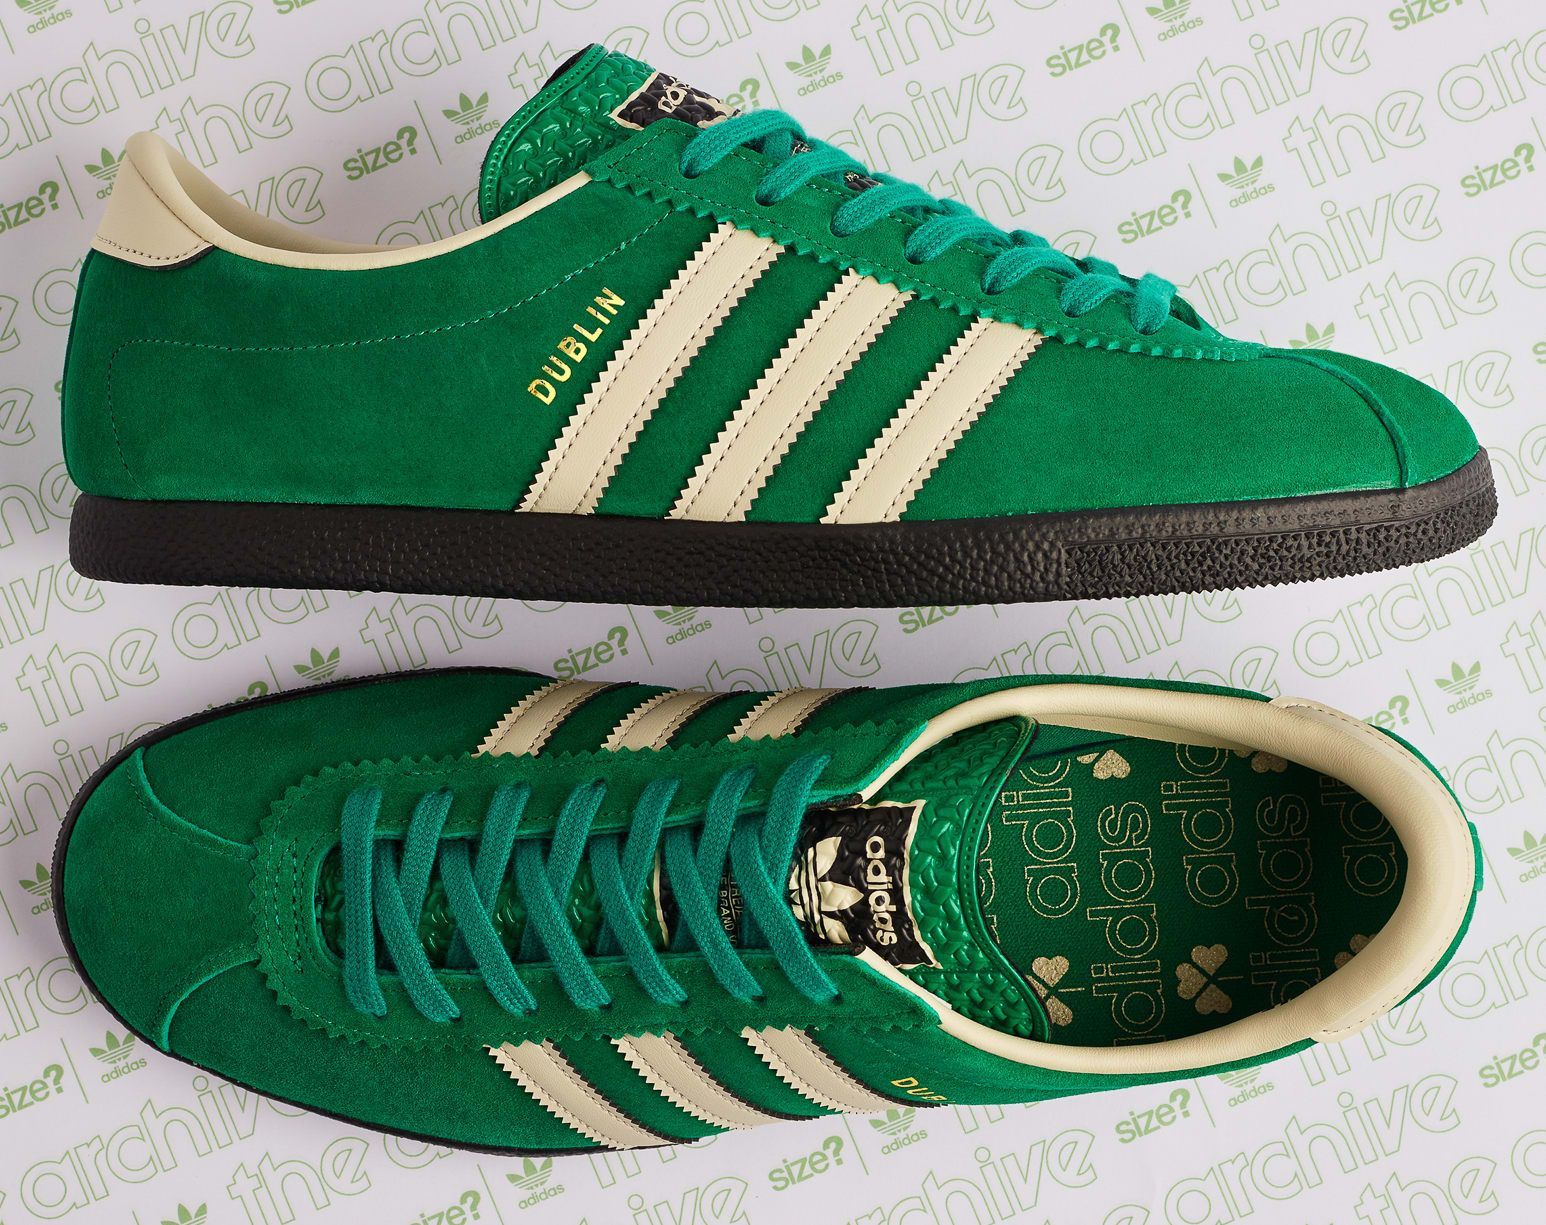 compañero laberinto Kilómetros Size? x Adidas Dublin 'St. Patrick's Day' Release Date | Sole Collector